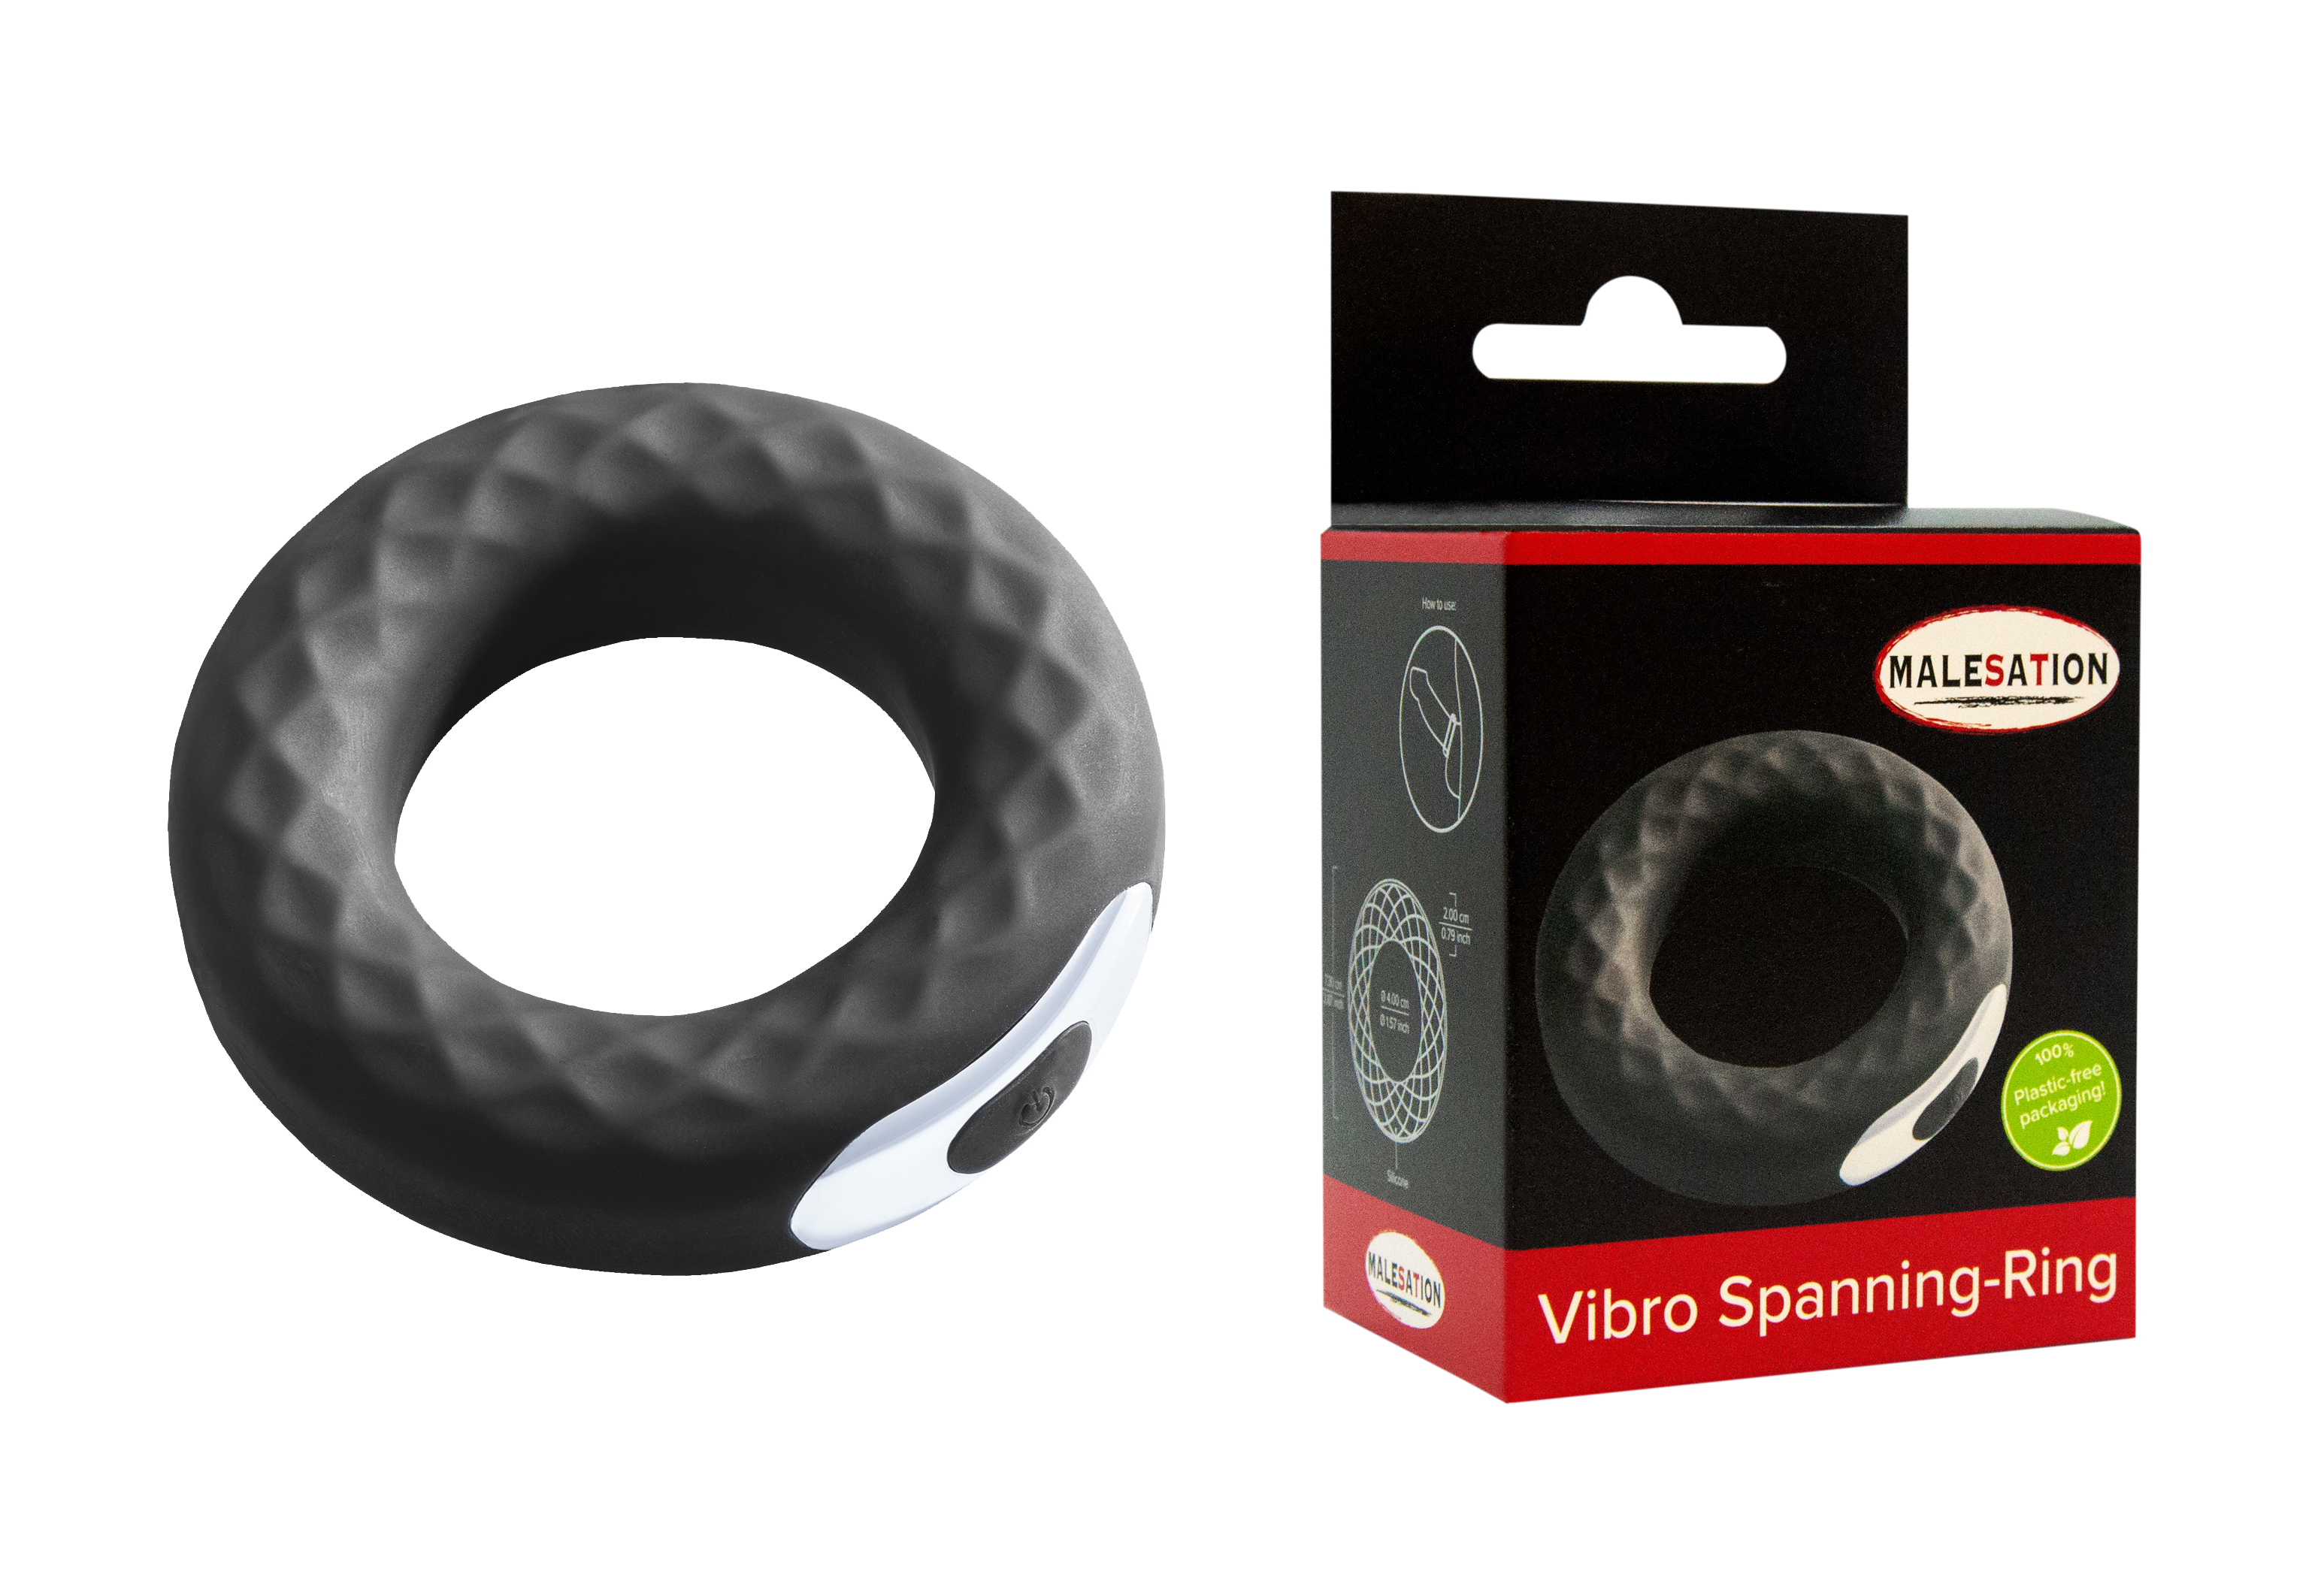 MALESATION Vibro Spanning-Ring